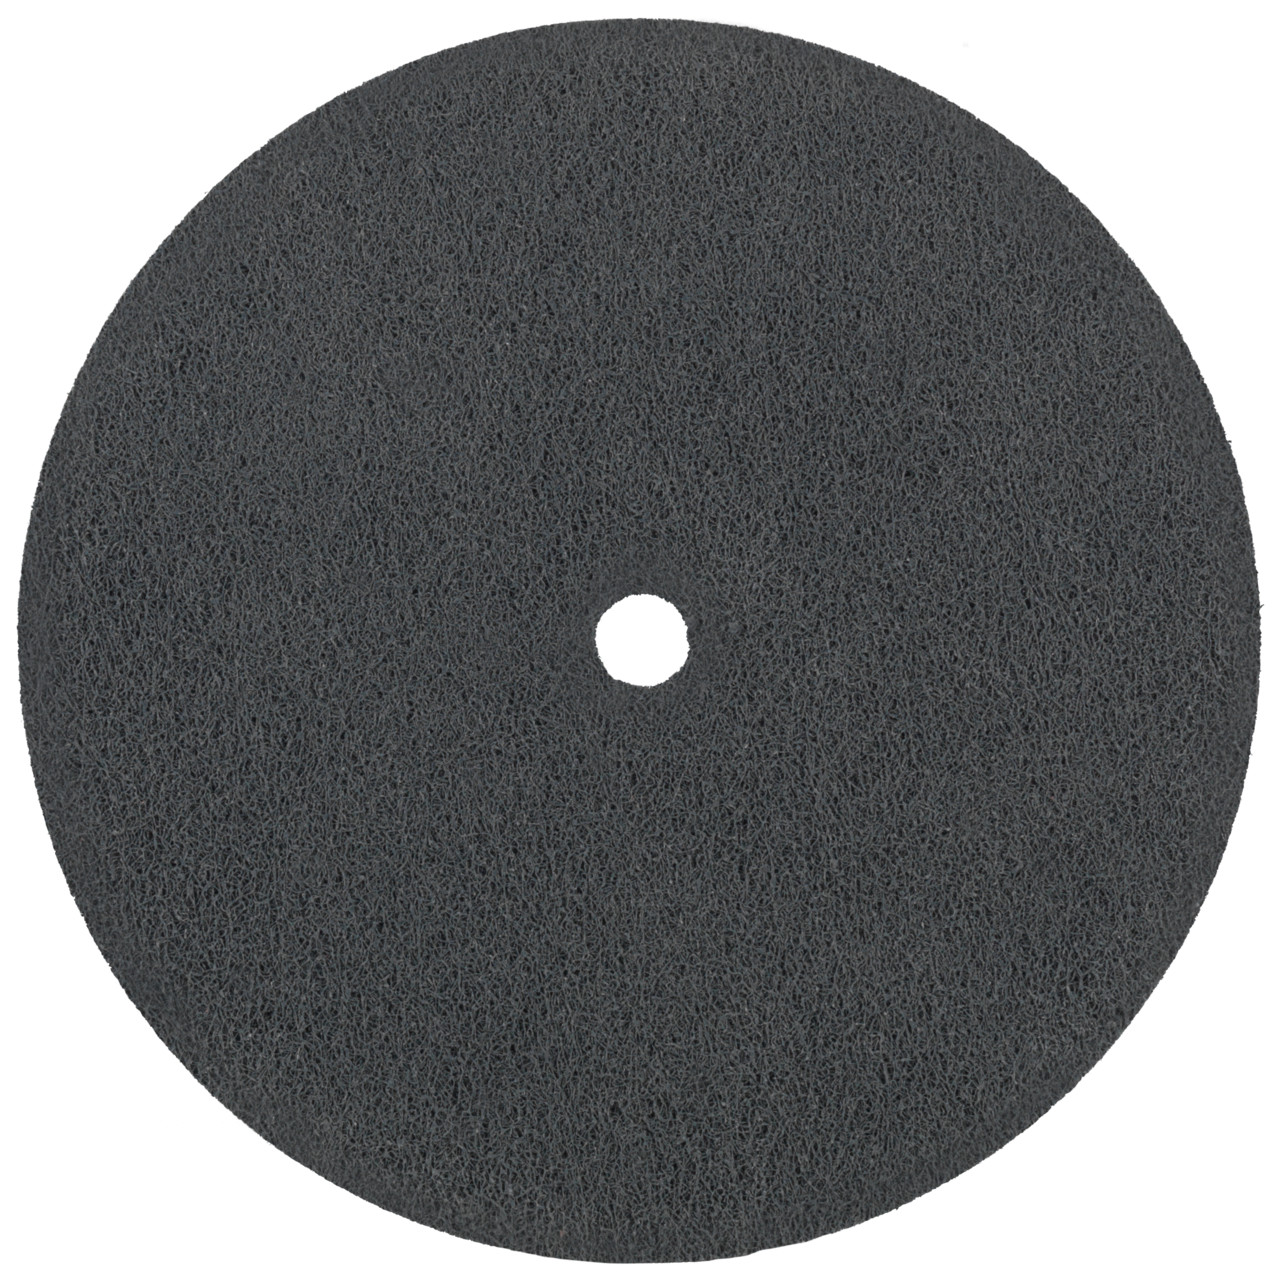 Tyrolit Pressed compact discs DxDxH 152x25x25.4 Universal insert, 2 C FEIN, shape: 1, Art. 34190305